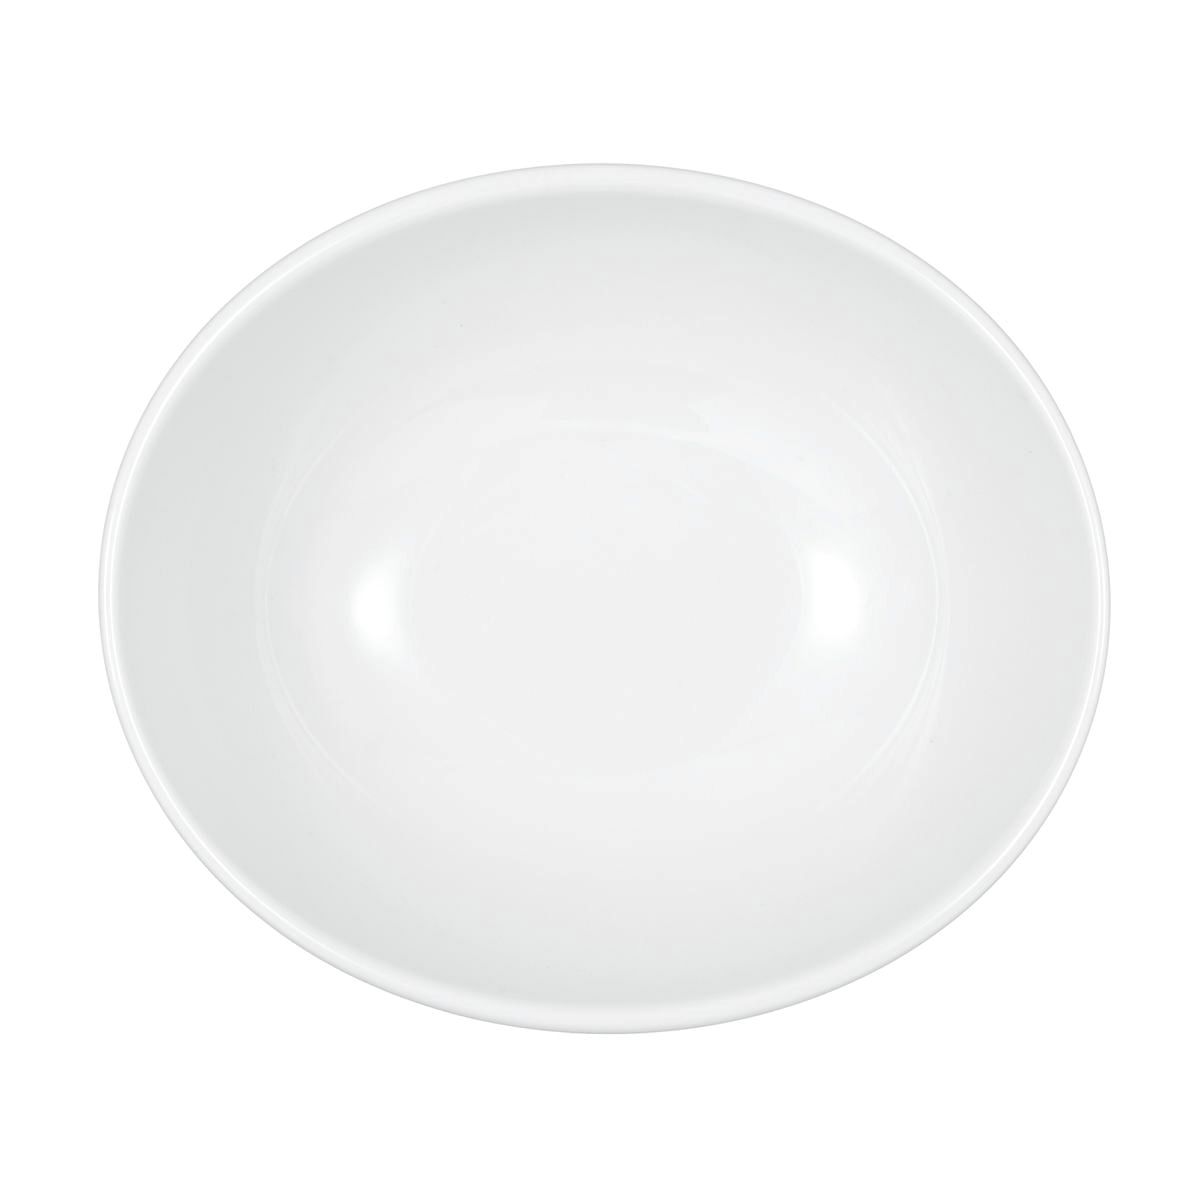 Suppenbowl oval 5238  16 cm - Serie Meran